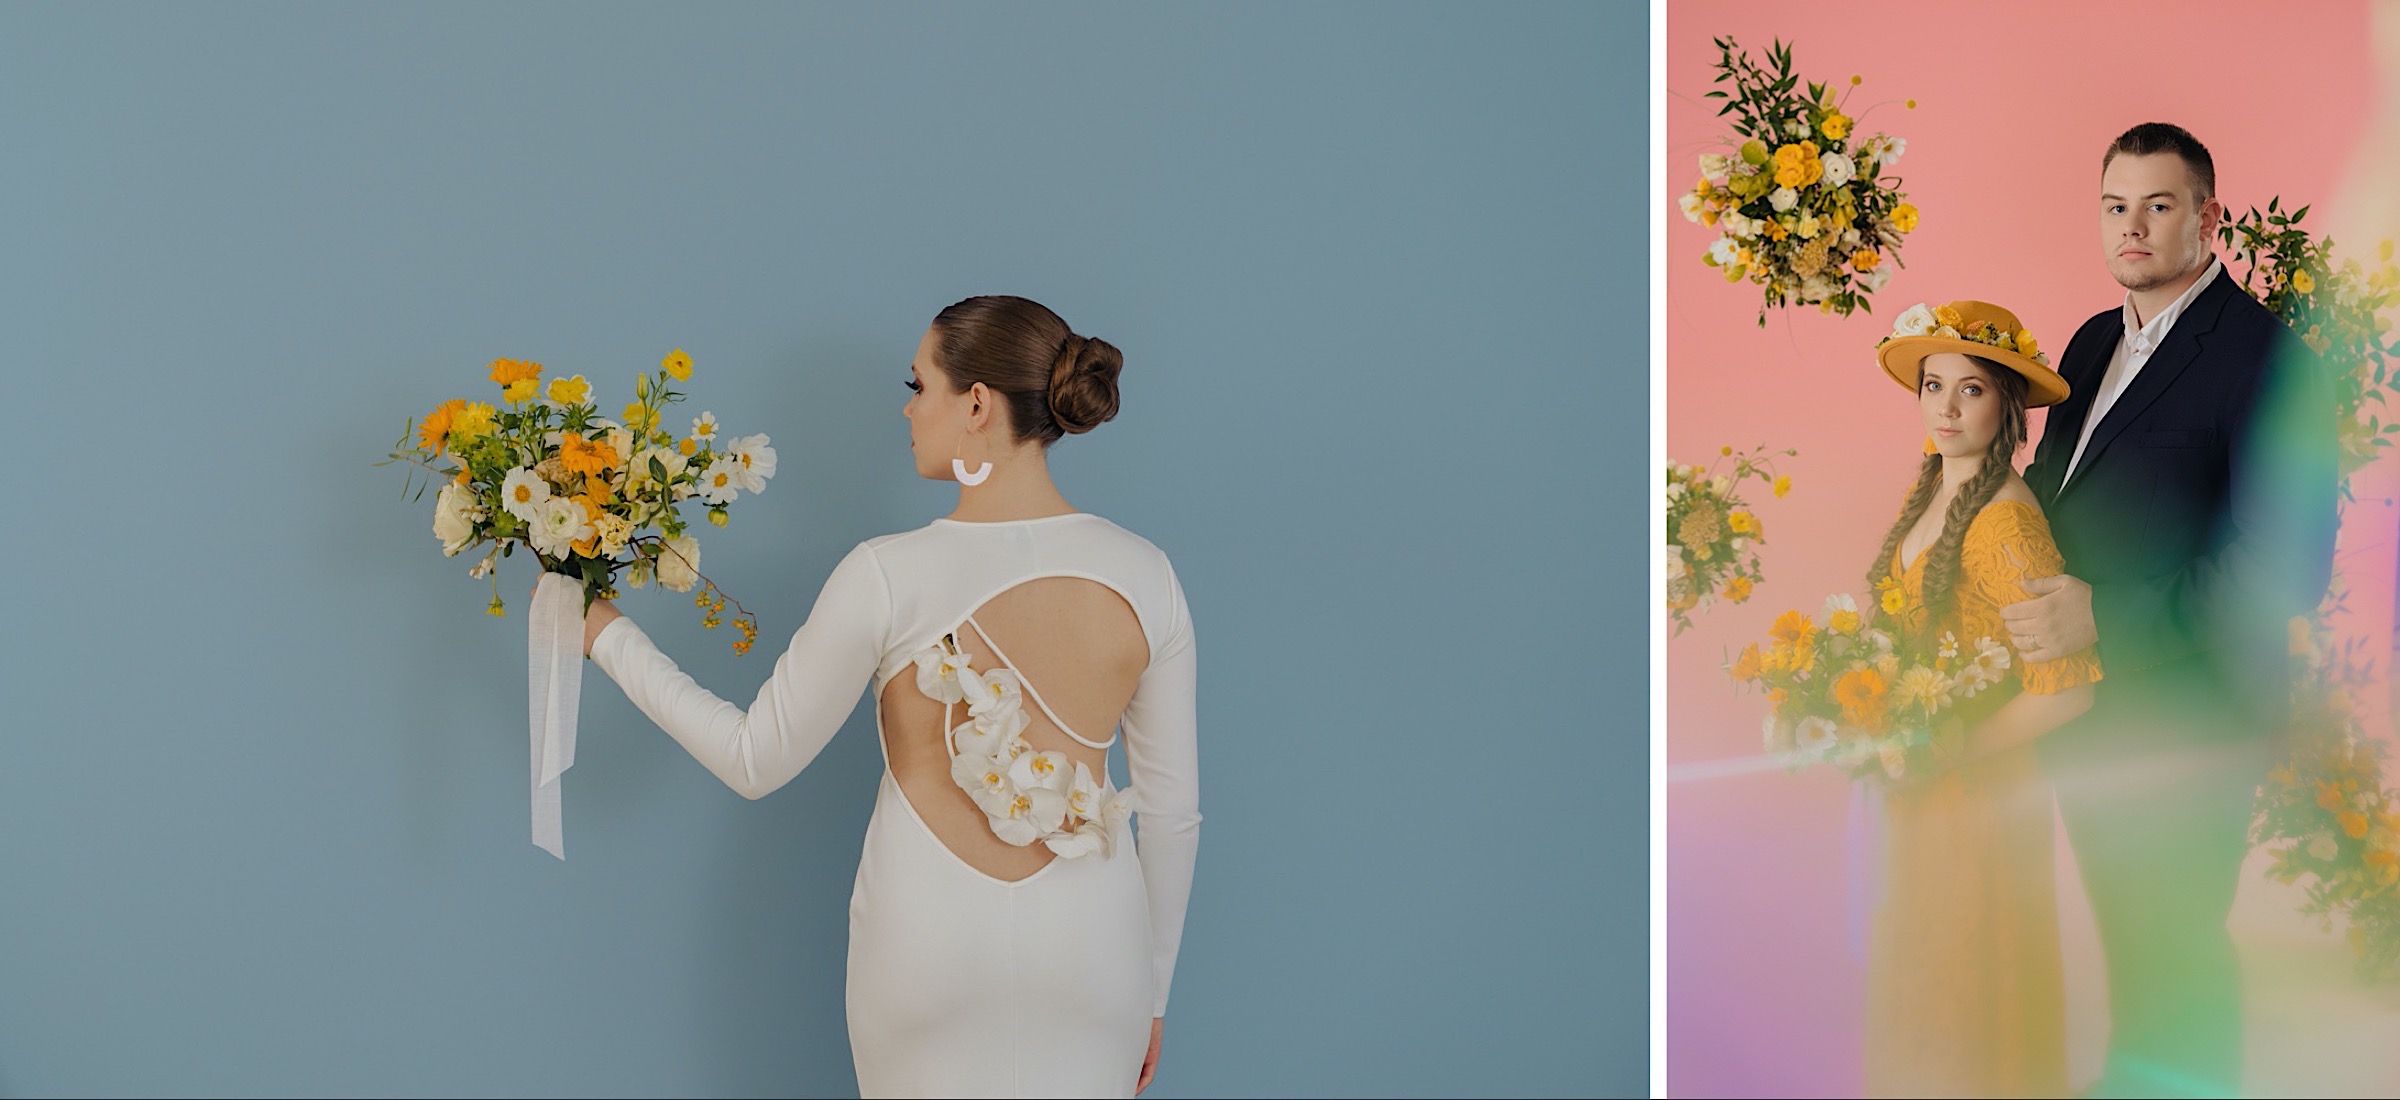 studio-styled-wedding-blue-pink-background-yellow-wedding-dress-modern-sleek-orange-yellow-bouquet